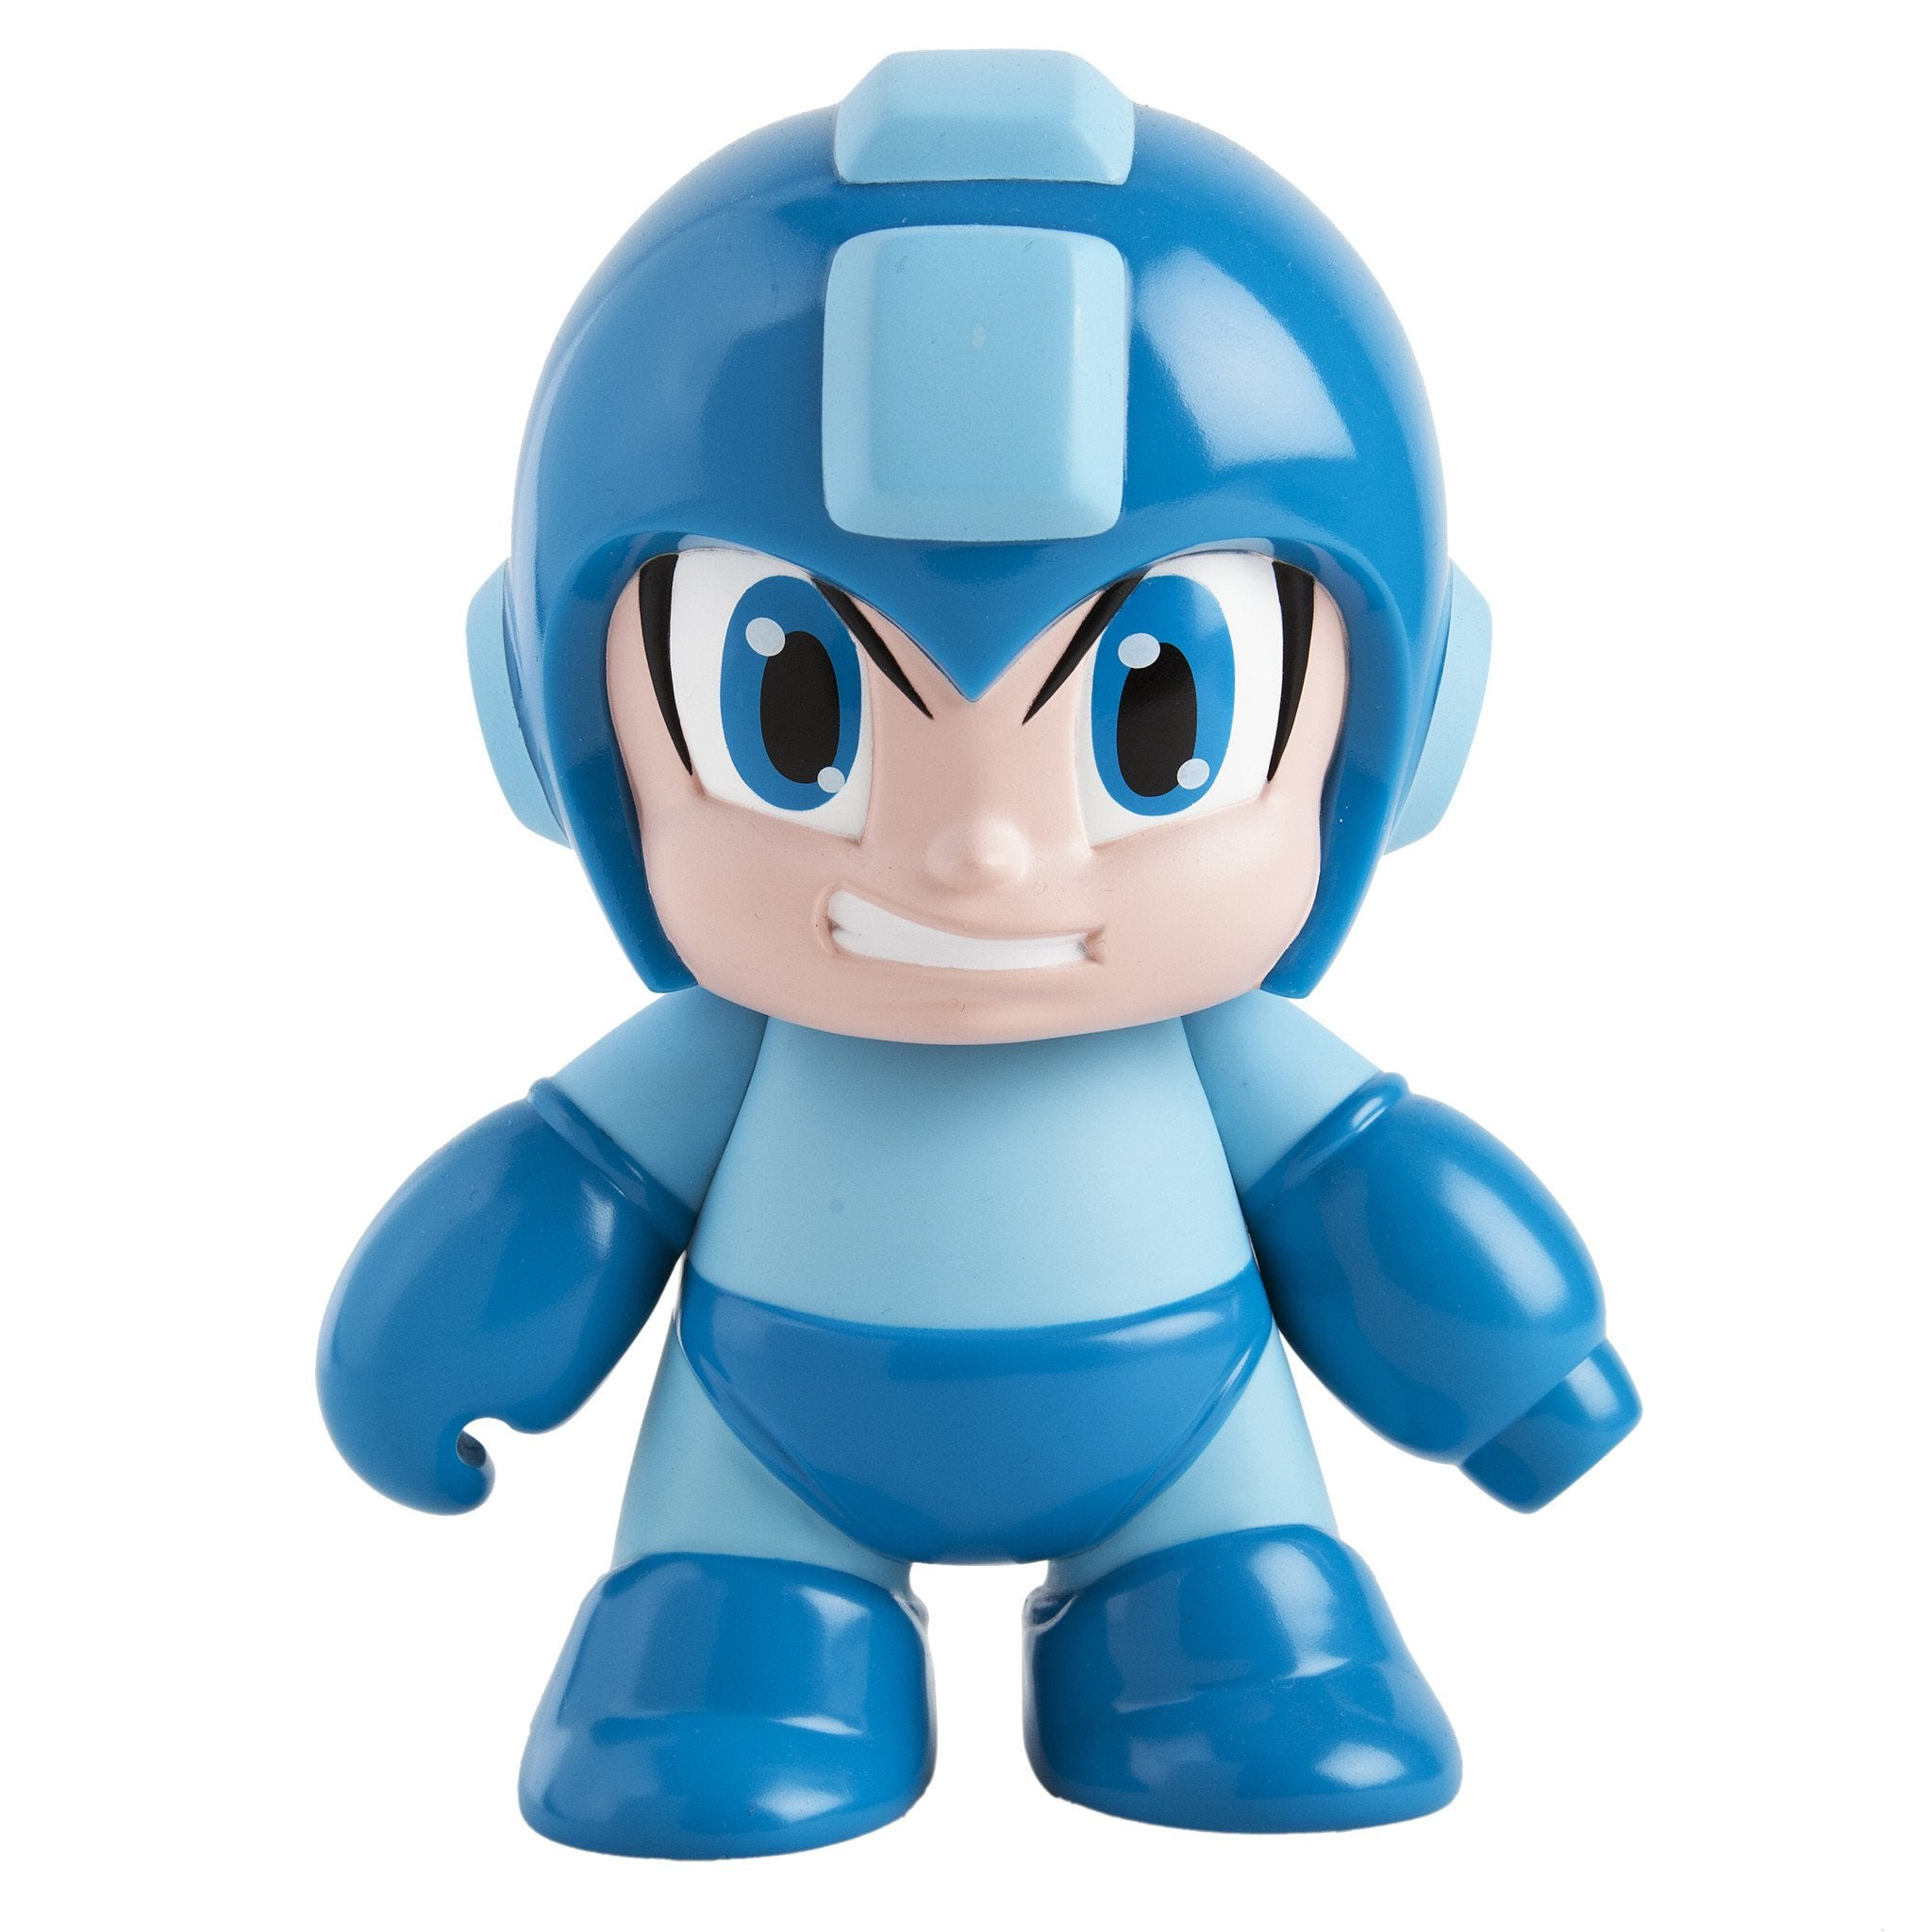 Mega Man 7" Medium Figure by Kidrobot